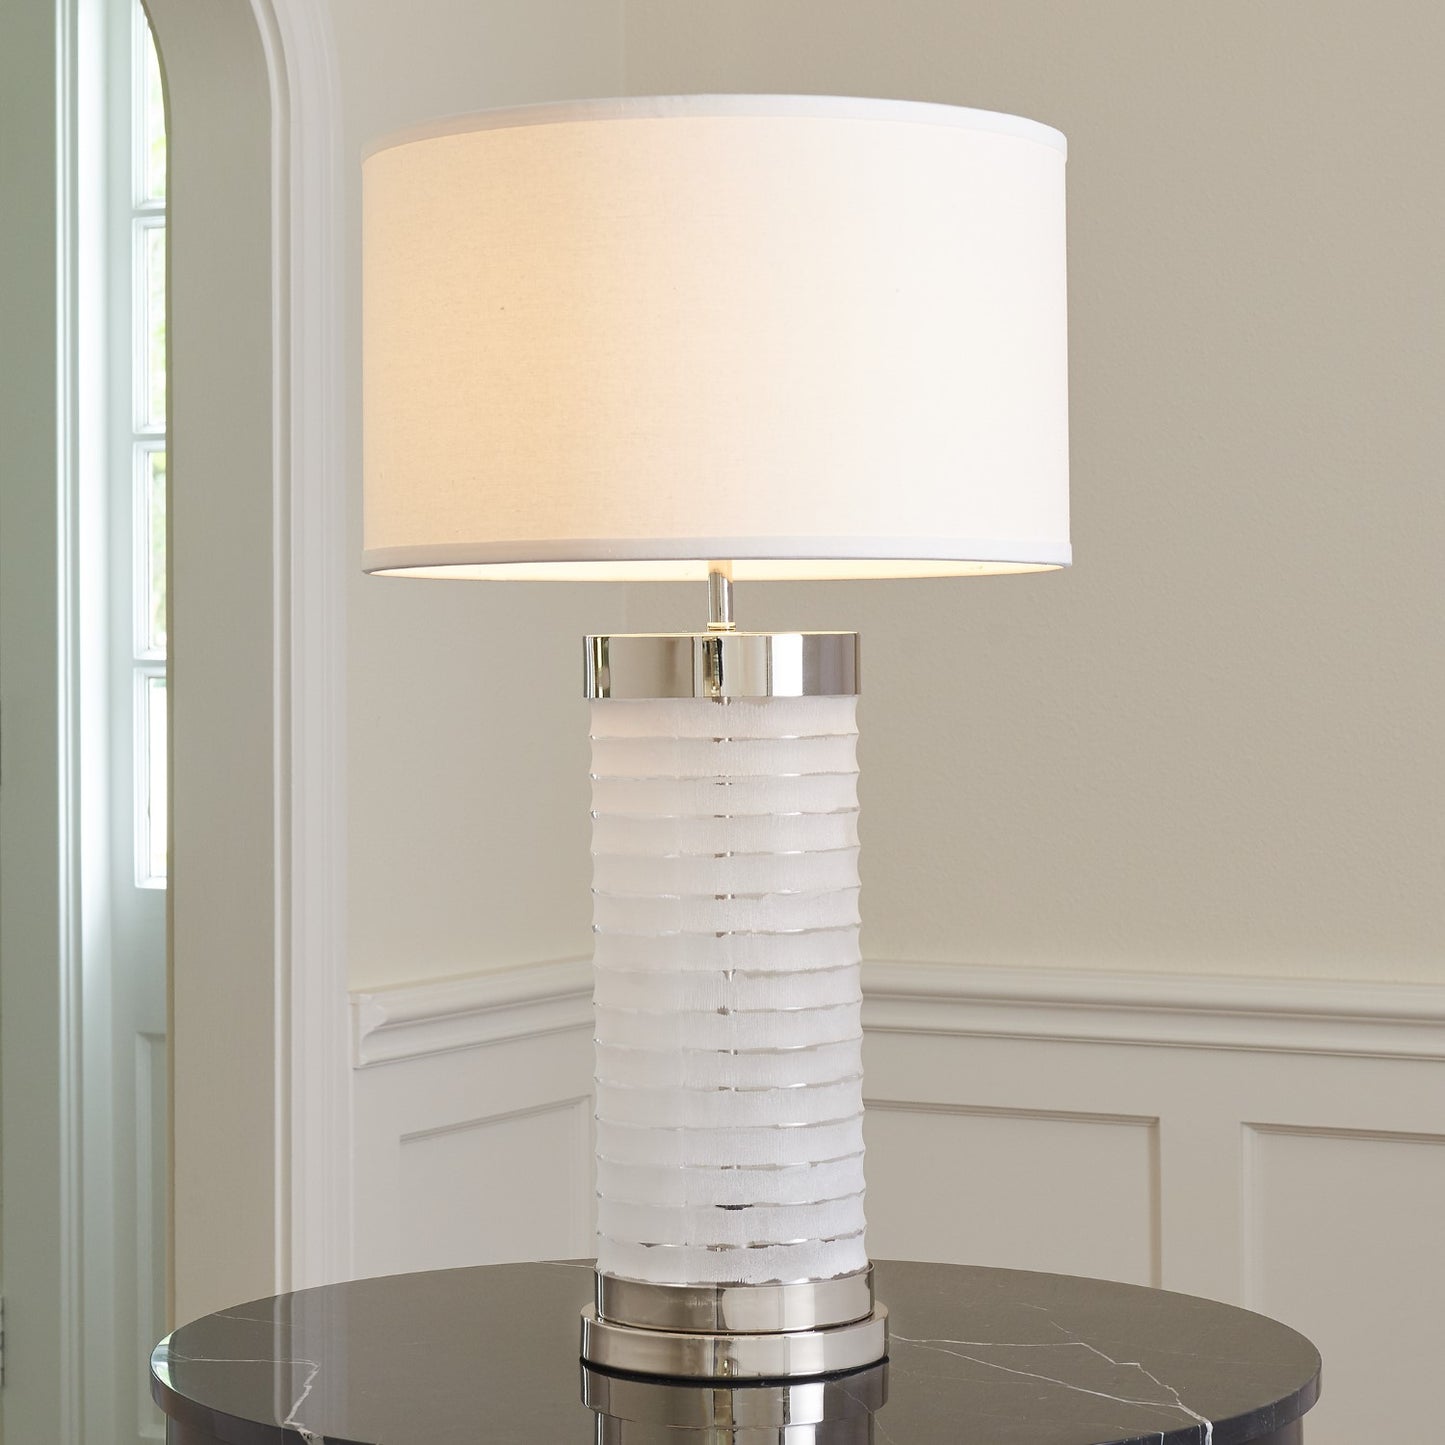 Chiseled Glass Lamp - Nickel - Grats Decor Interior Design & Build Inc.